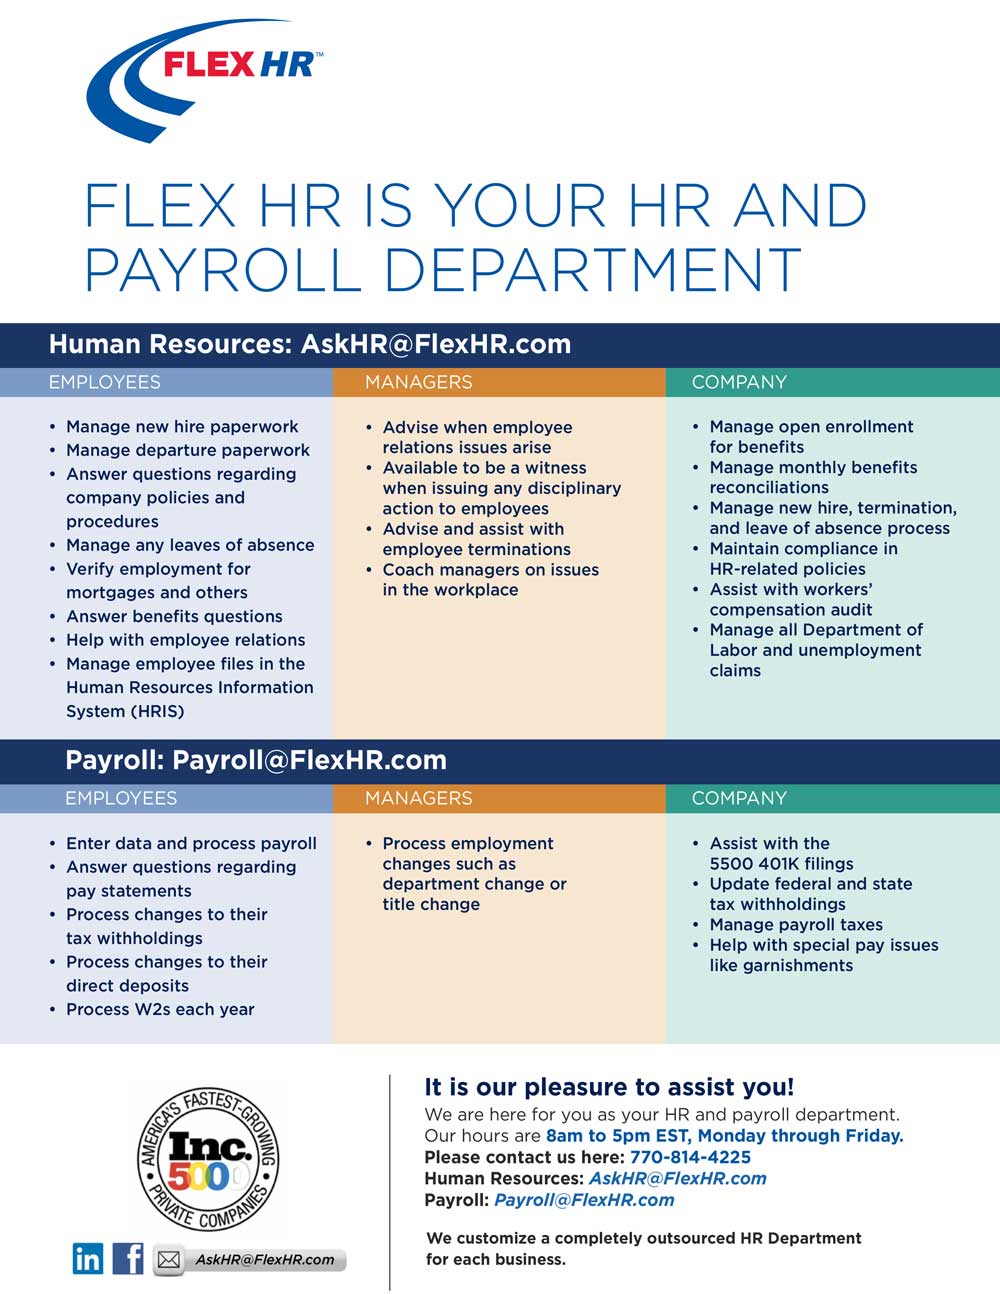 Flex HR Outsourcing Department